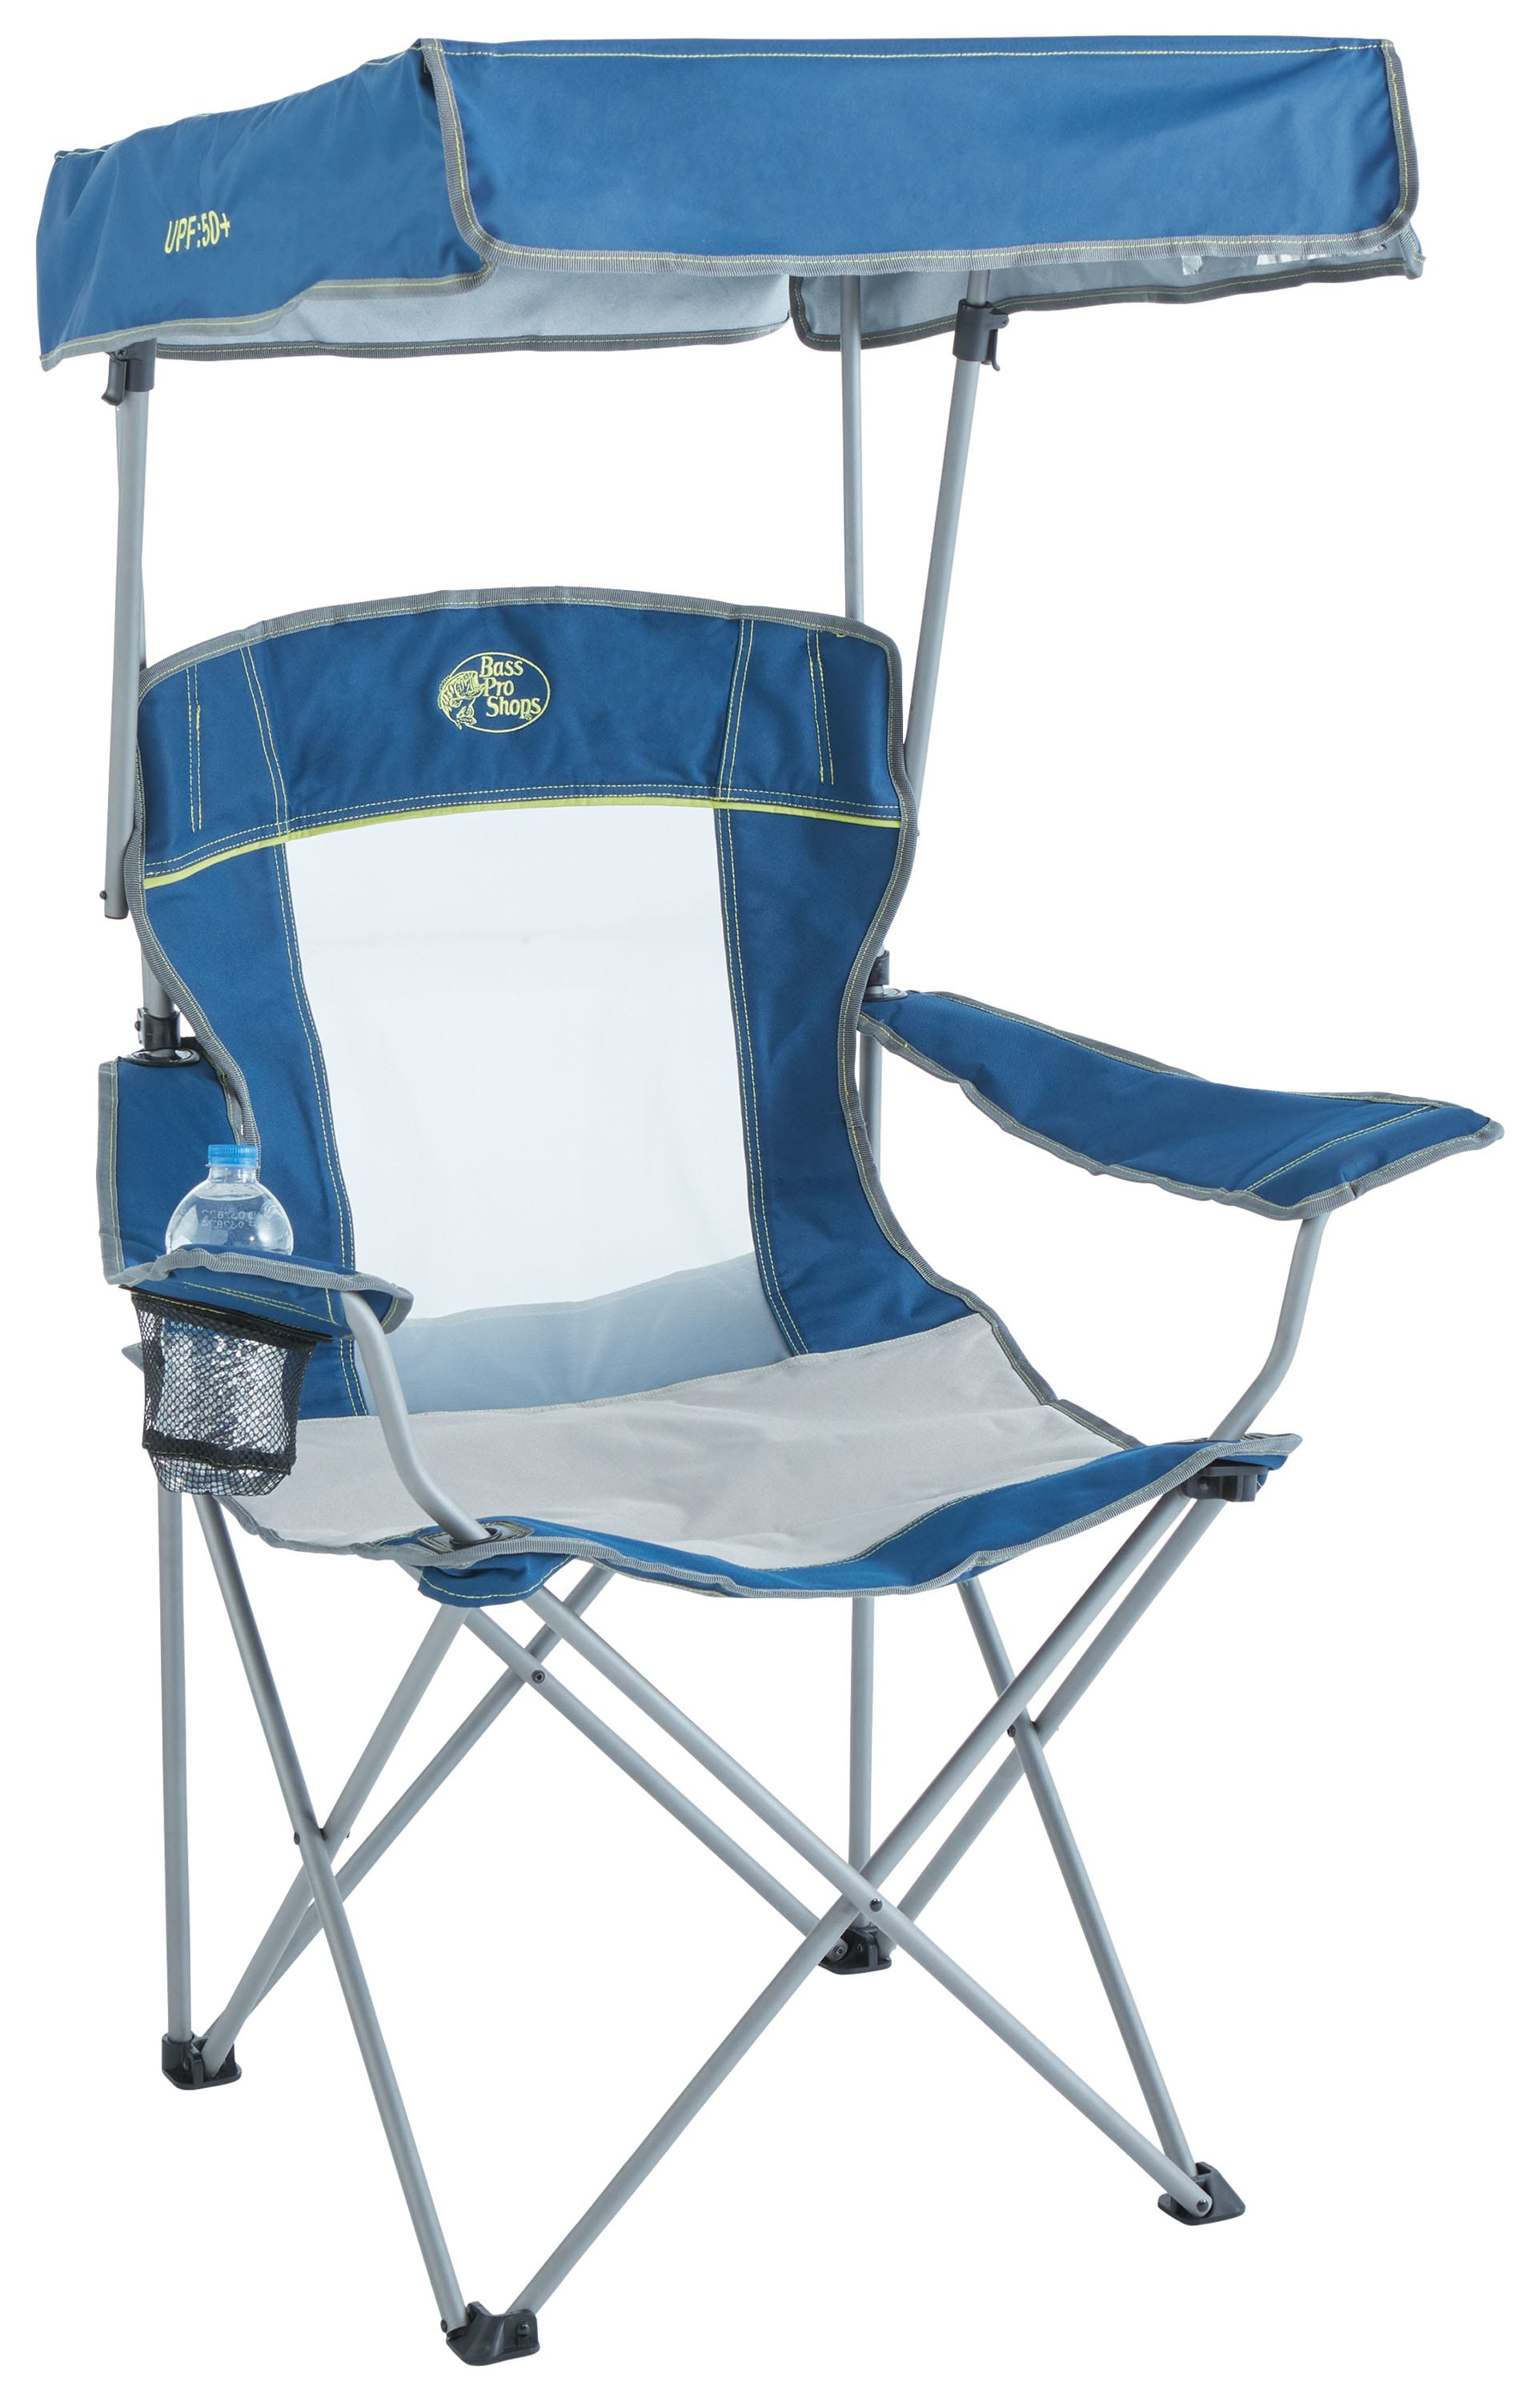 Bass Pro Shops® Mesh Back Canopy Chair